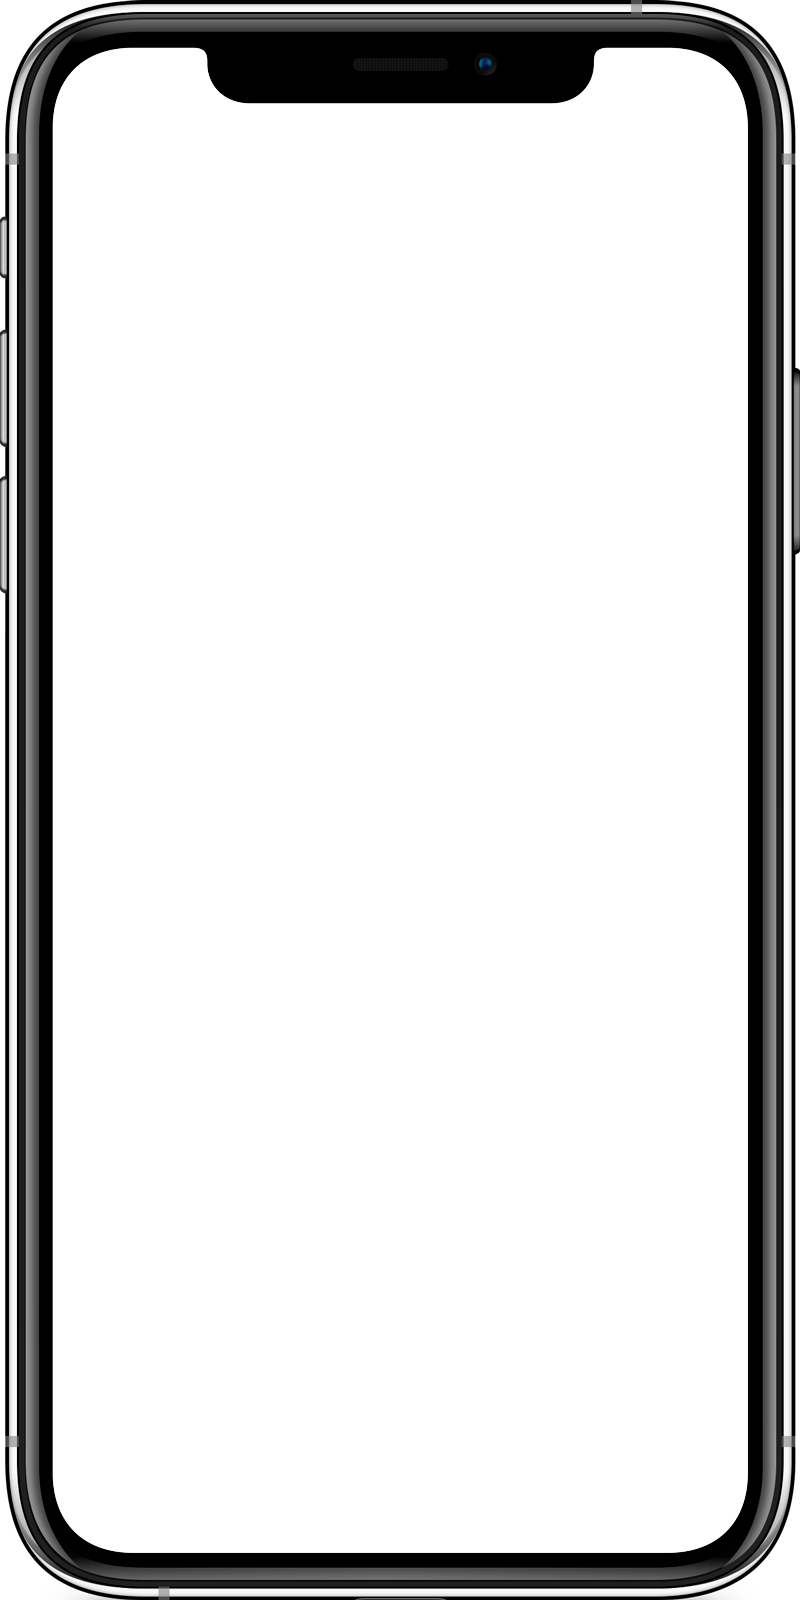 Apple Iphone X Frame Adveo